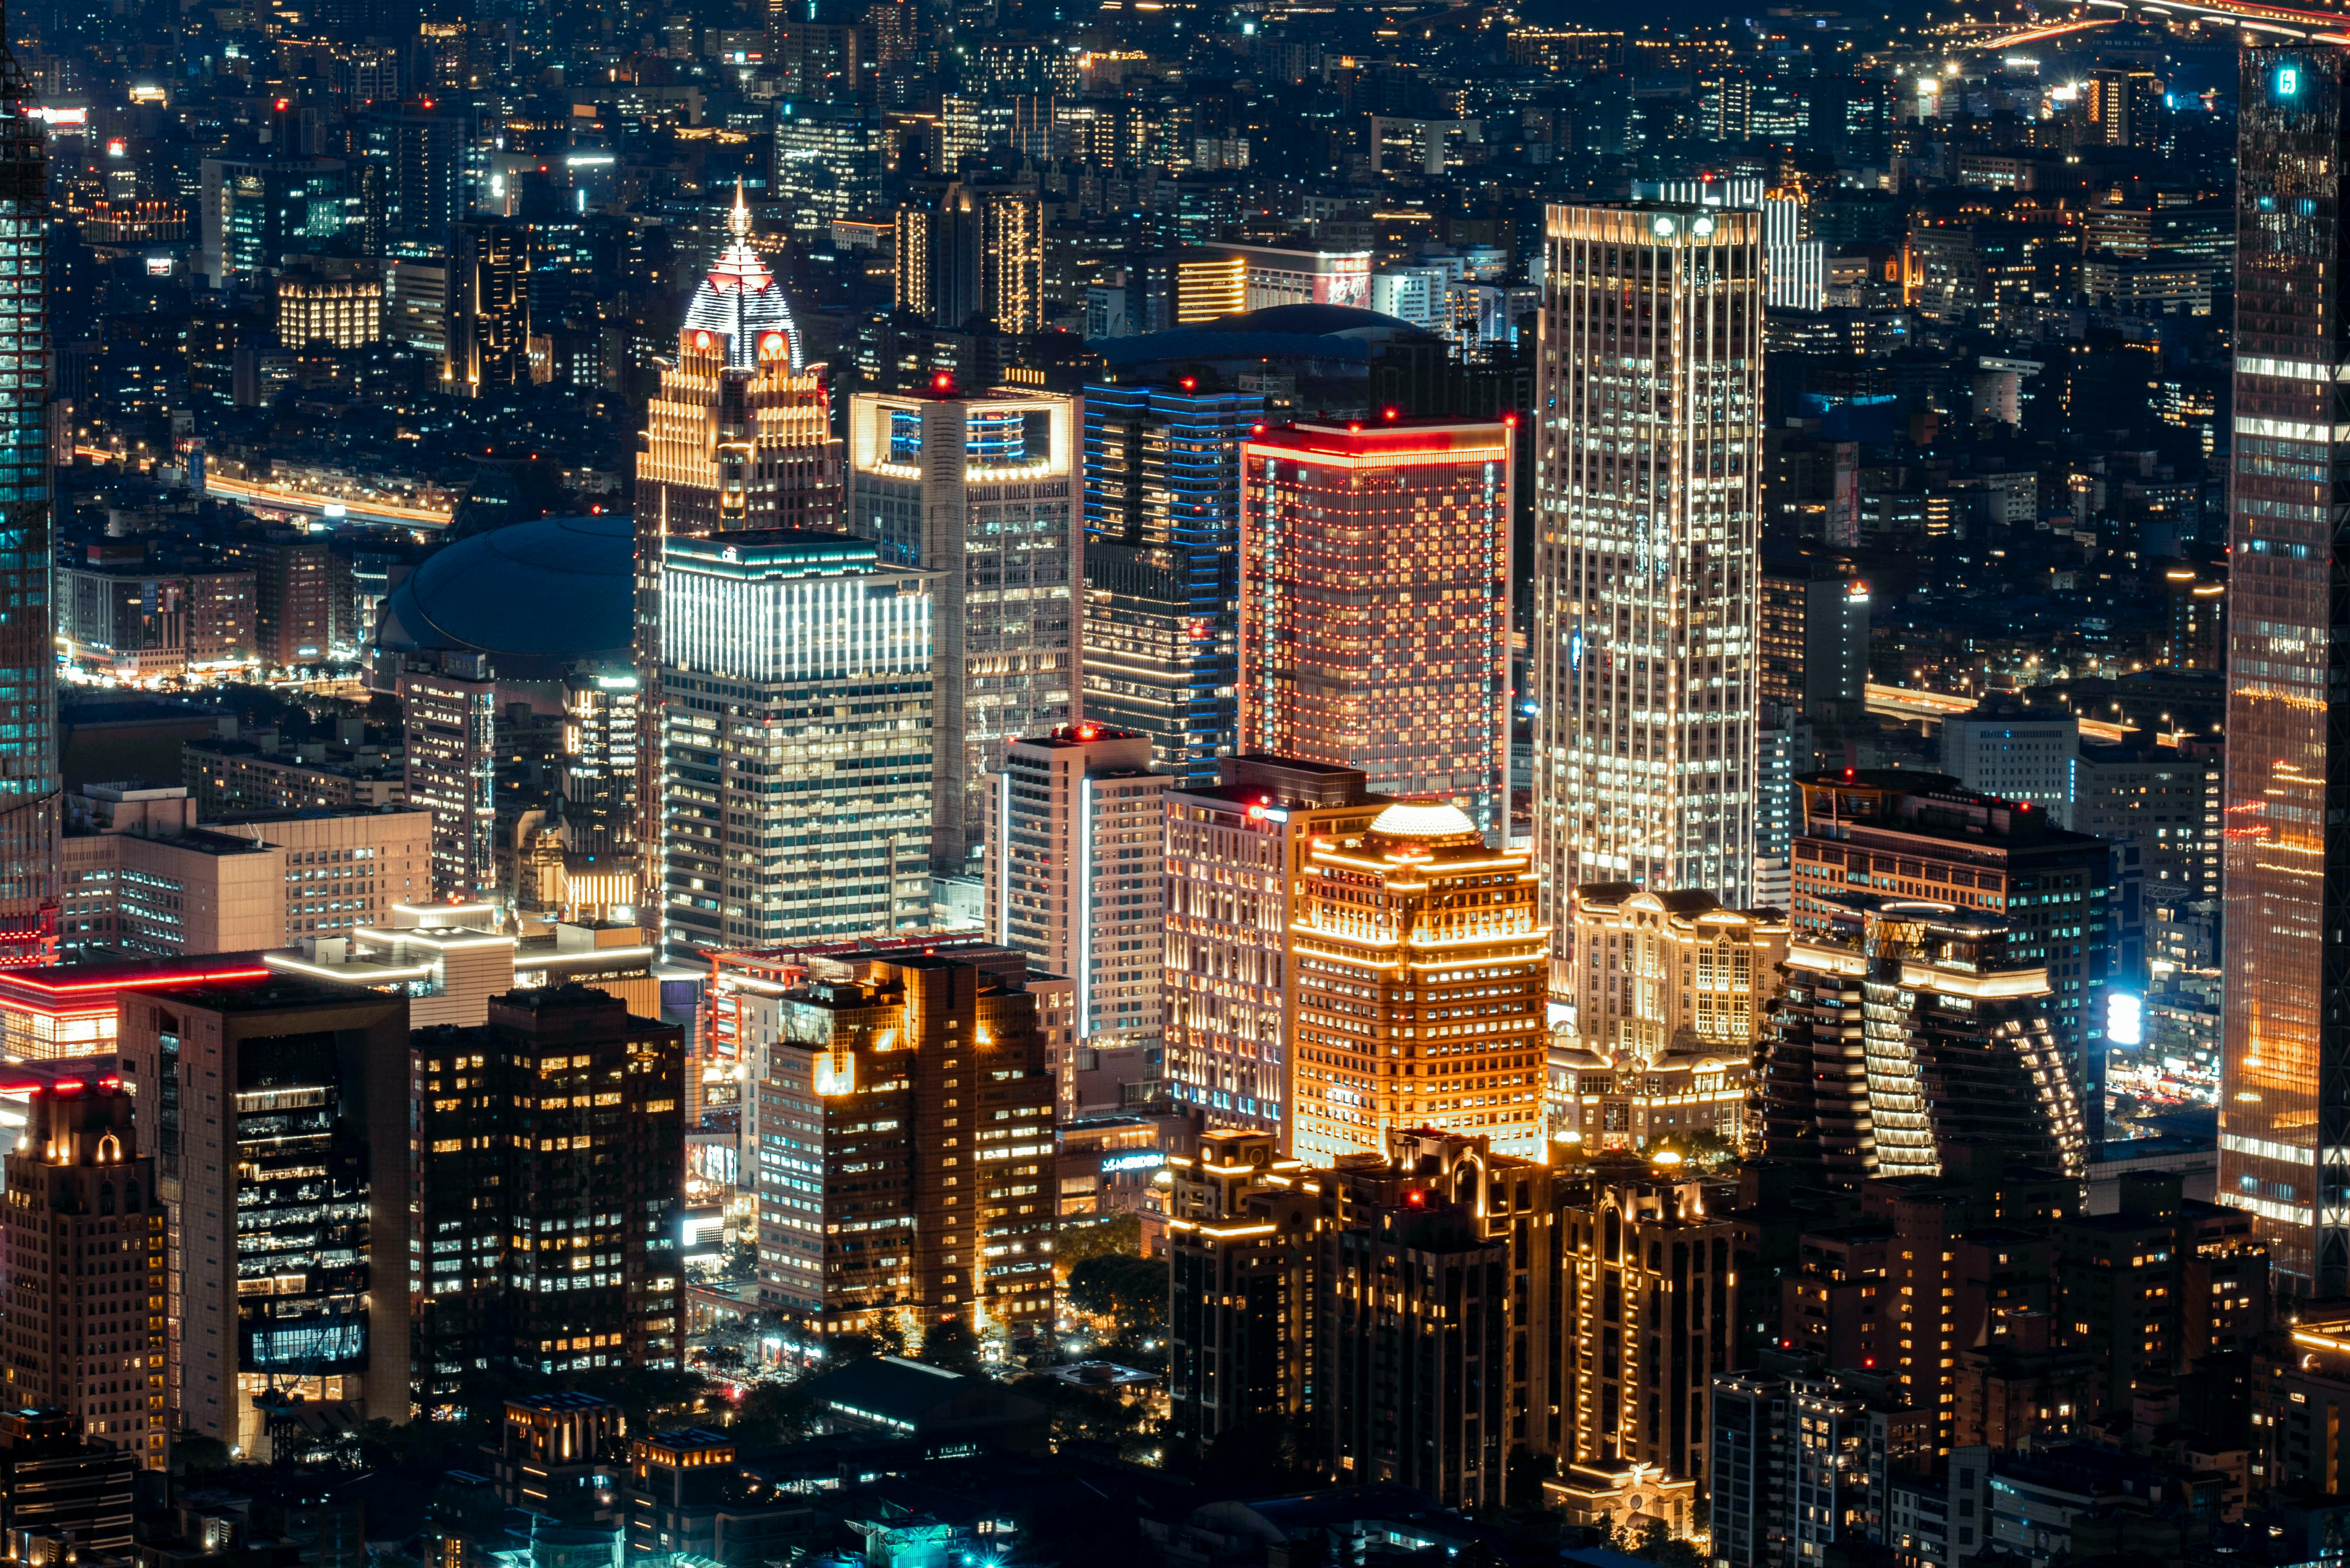 Illuminated Buildings in City at Night · Free Stock Photo